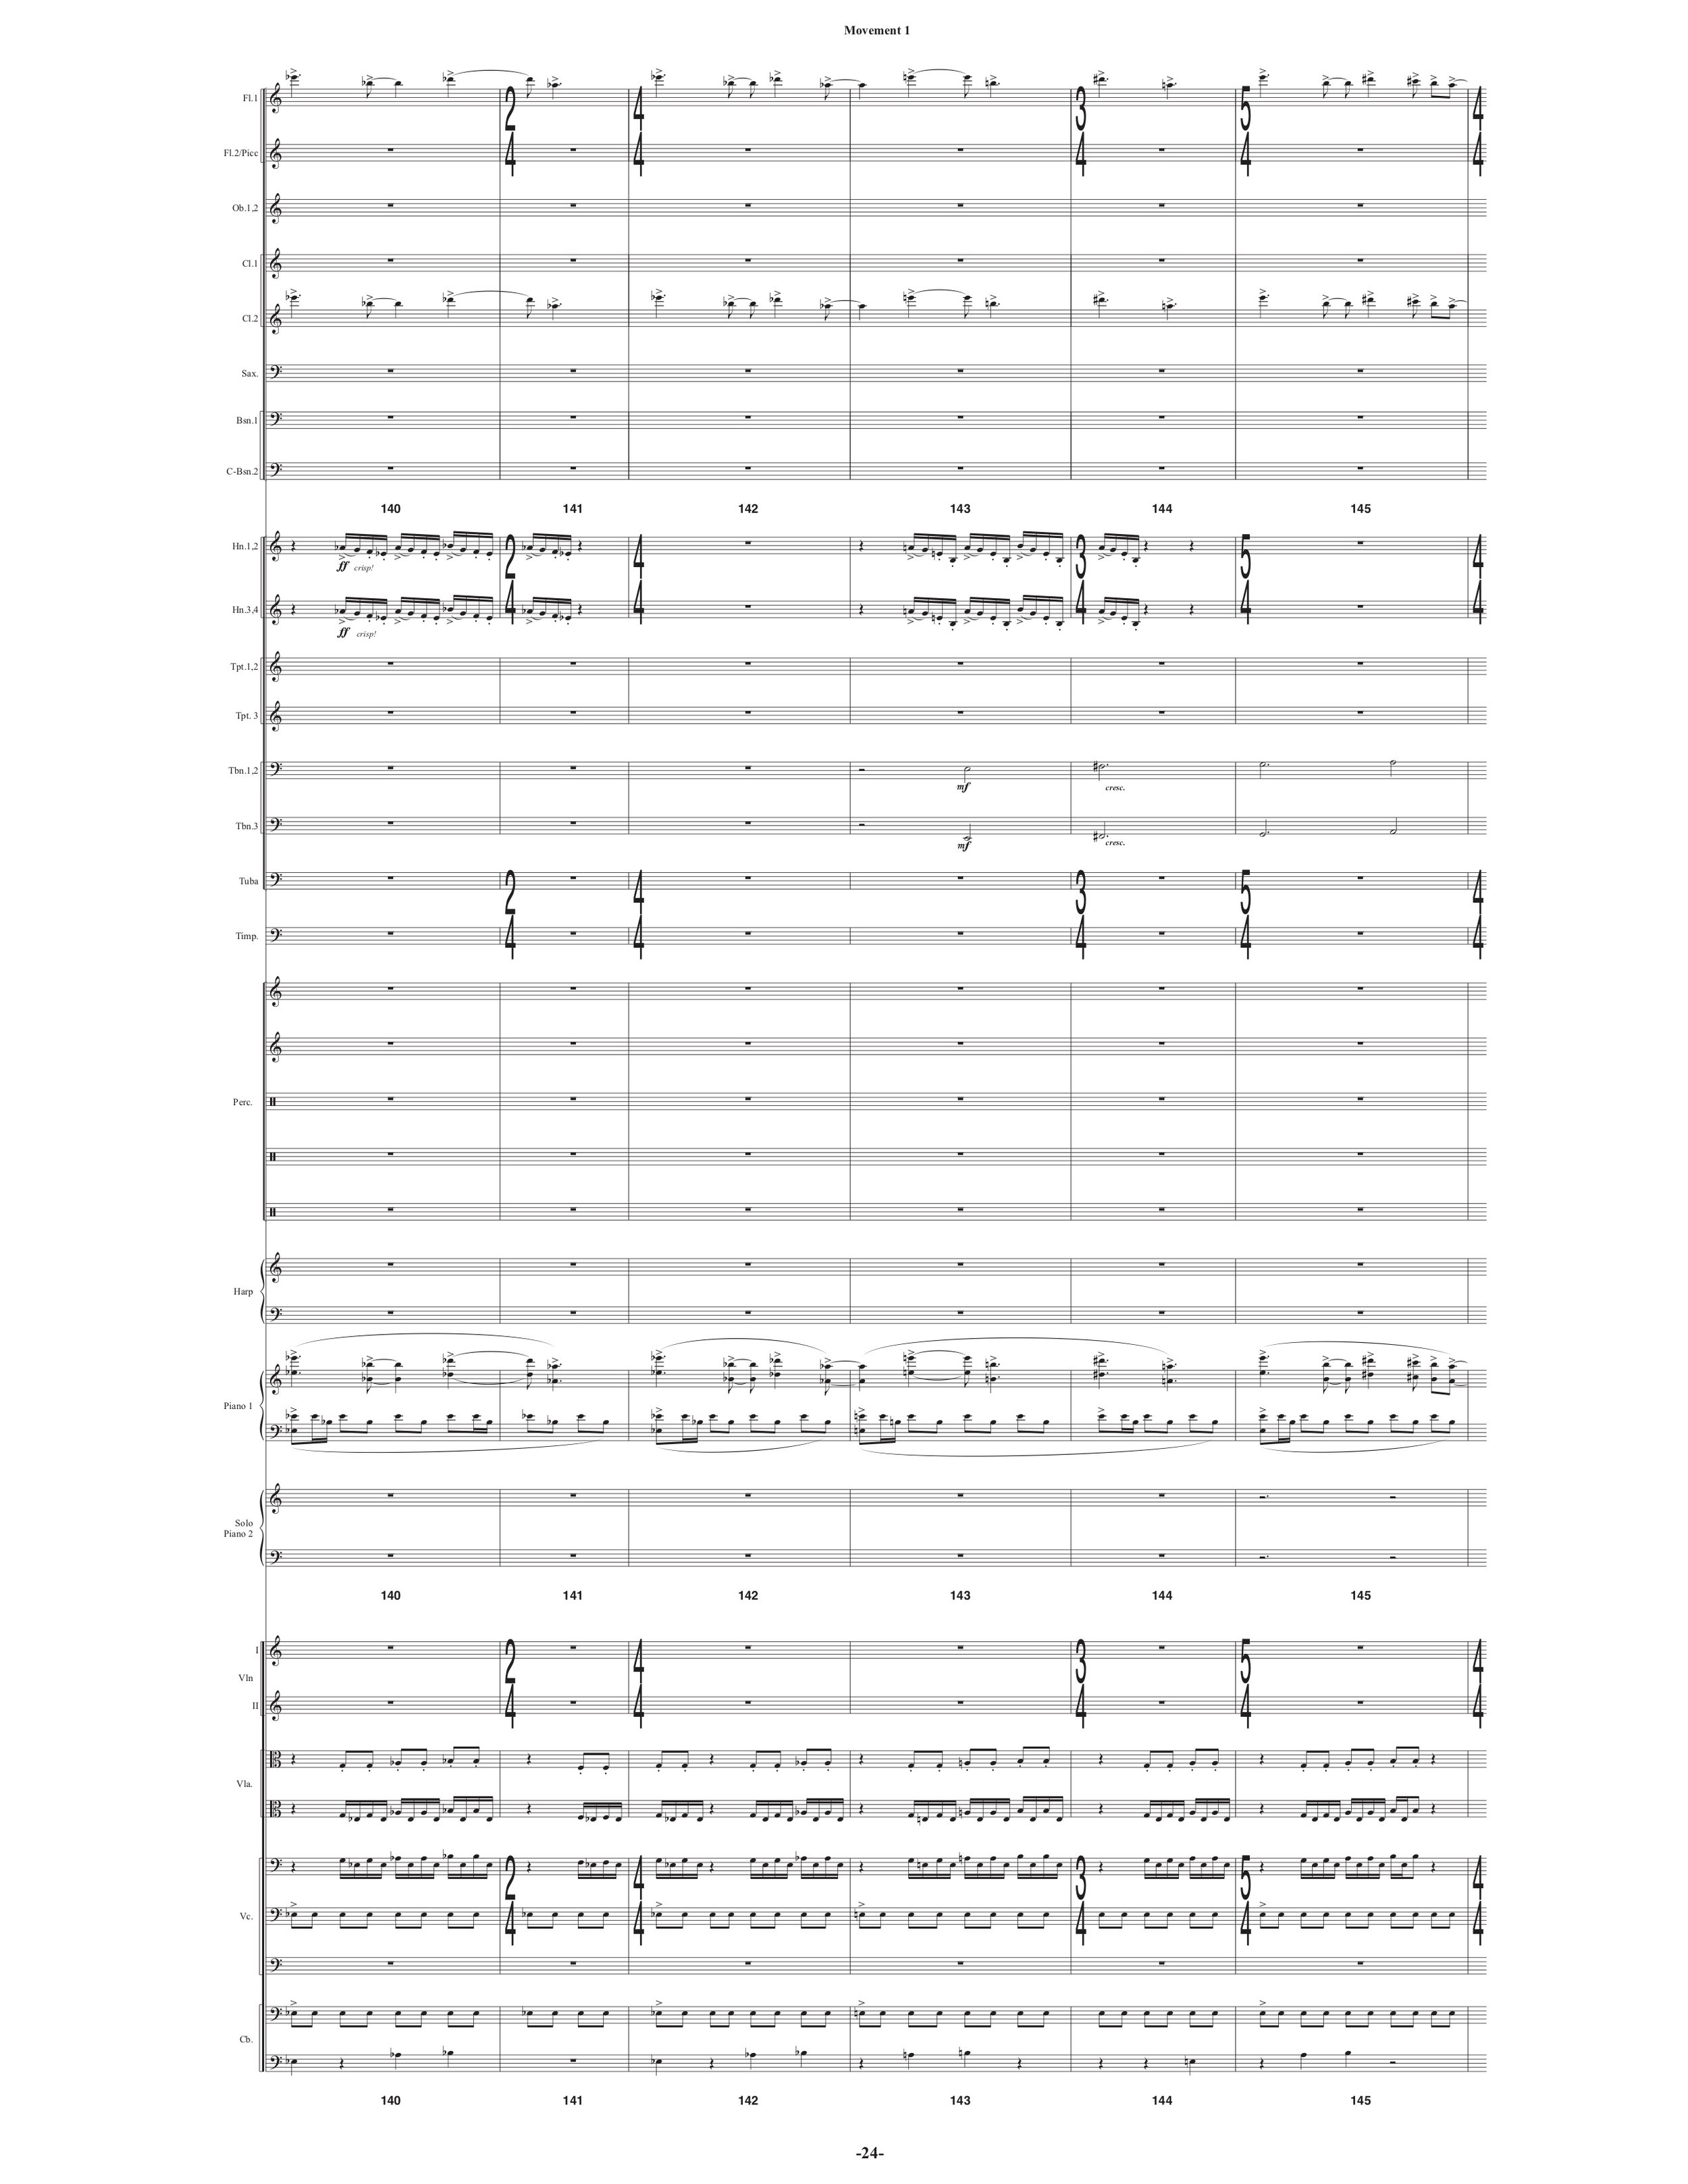 Symphony_Orch & 2 Pianos p29.jpg